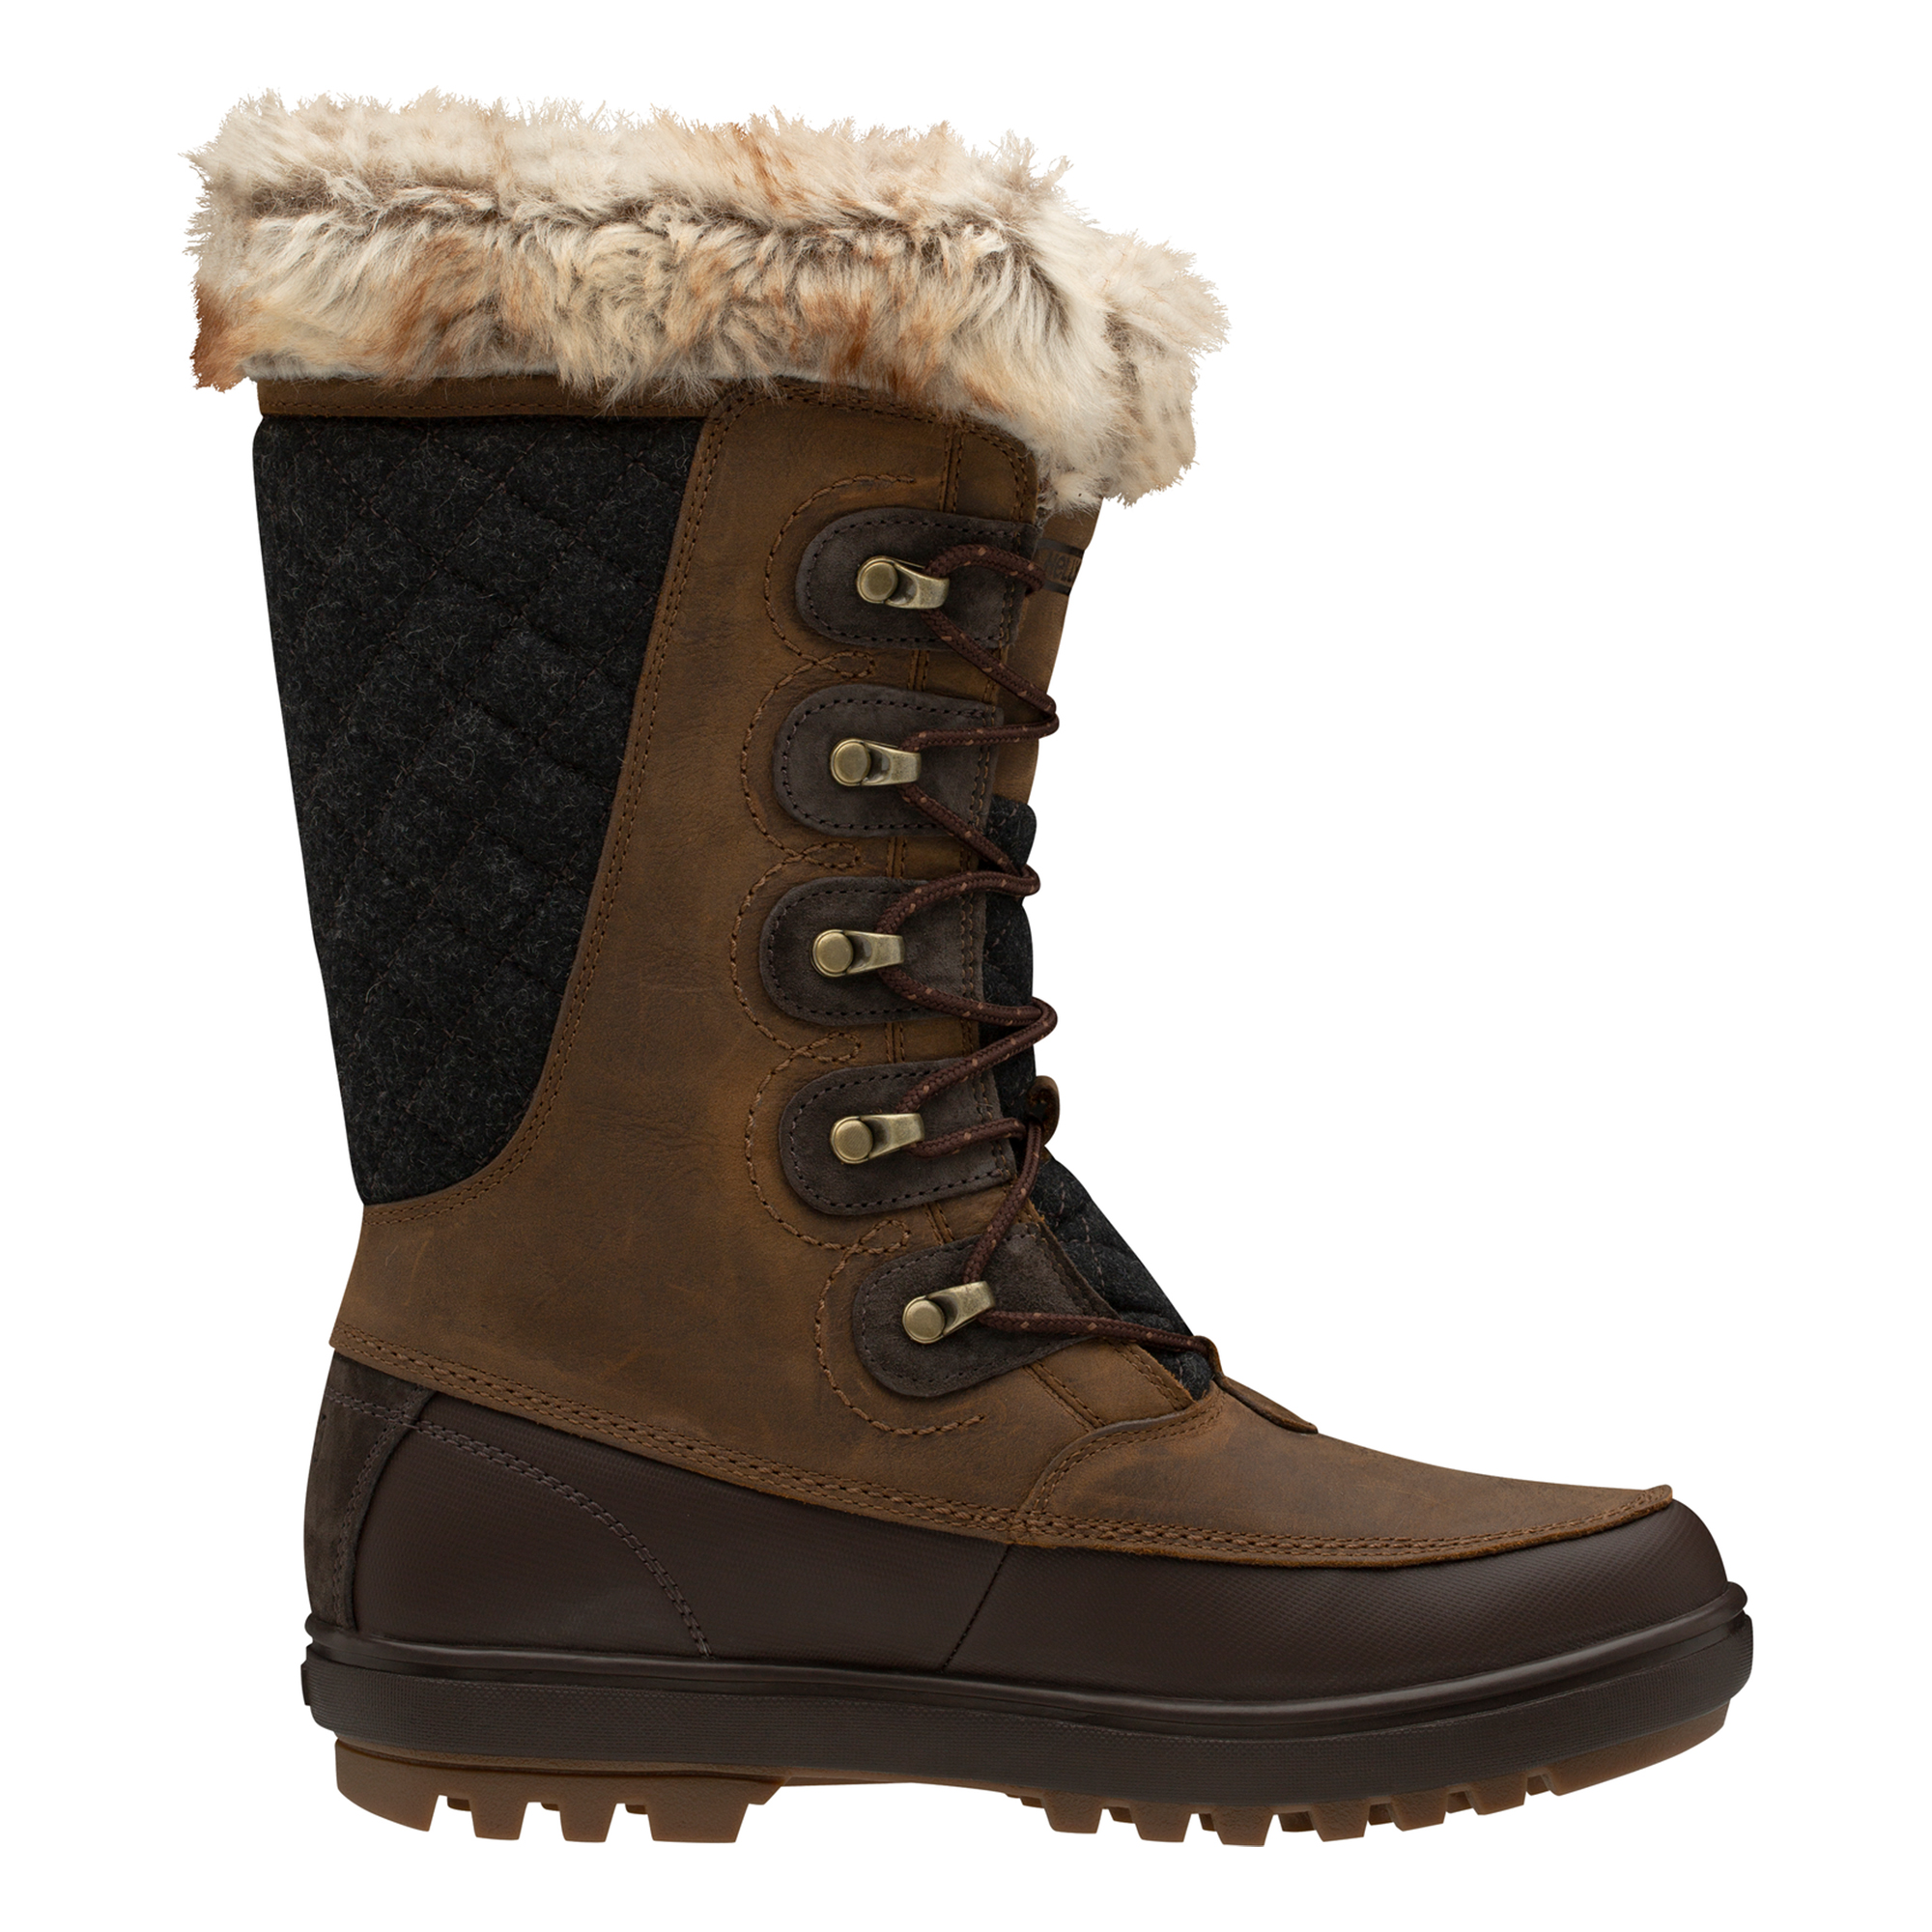 Helly Hansen Women's Garibaldi VL Snow Boots -  07040056409900